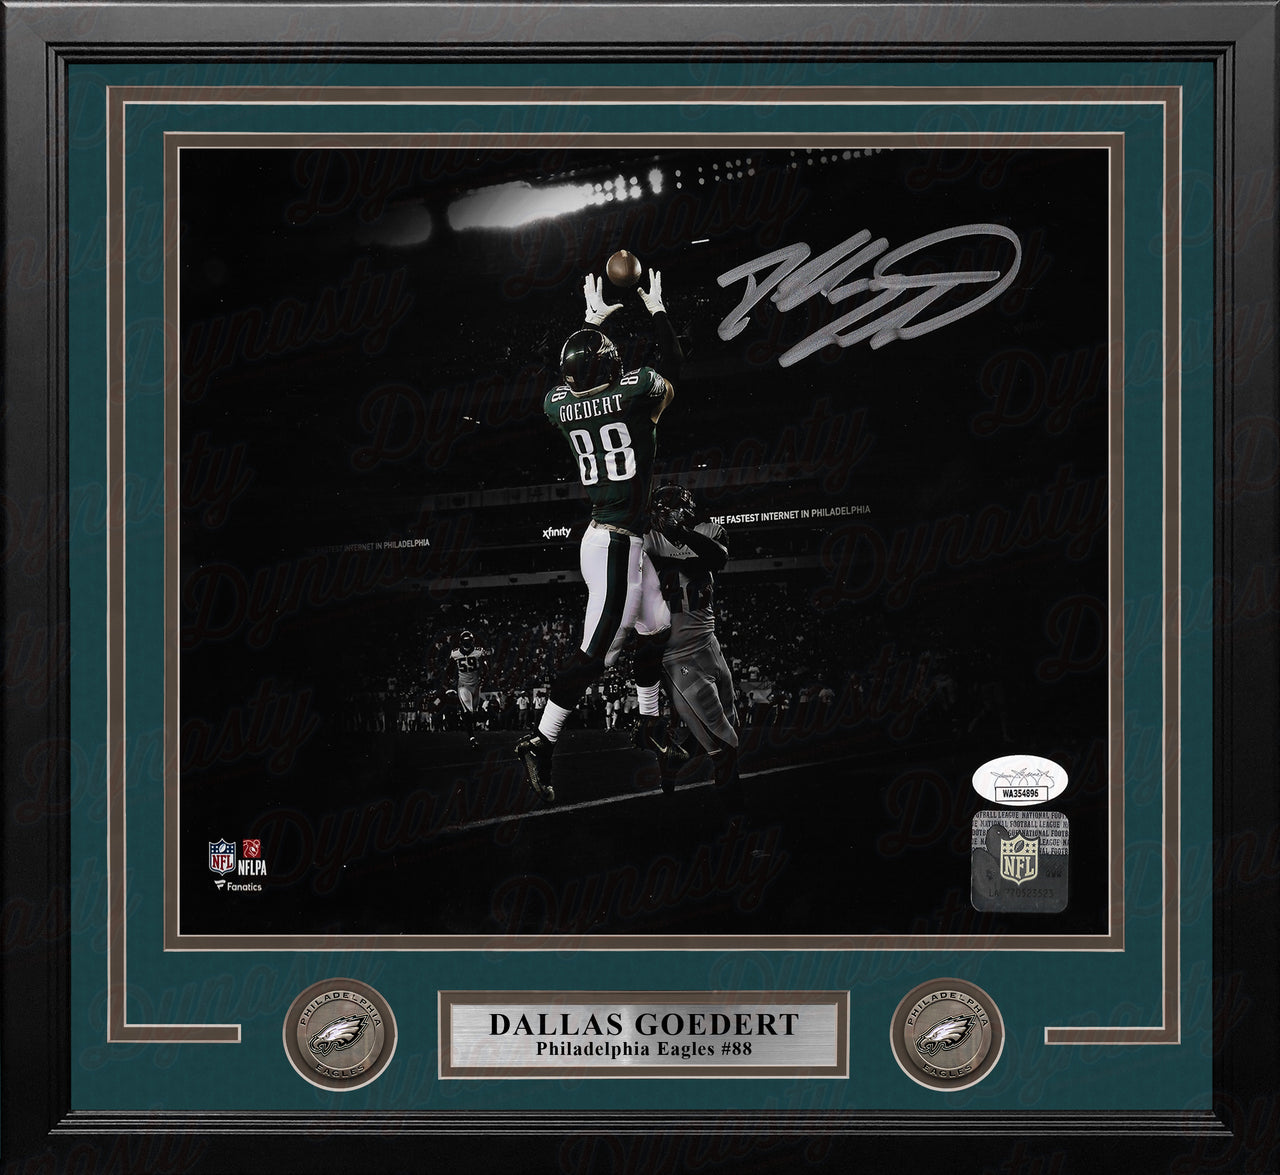 Dallas Goedert End Zone Touchdown Philadelphia Eagles Autographed Framed Blackout Football Photo - Dynasty Sports & Framing 